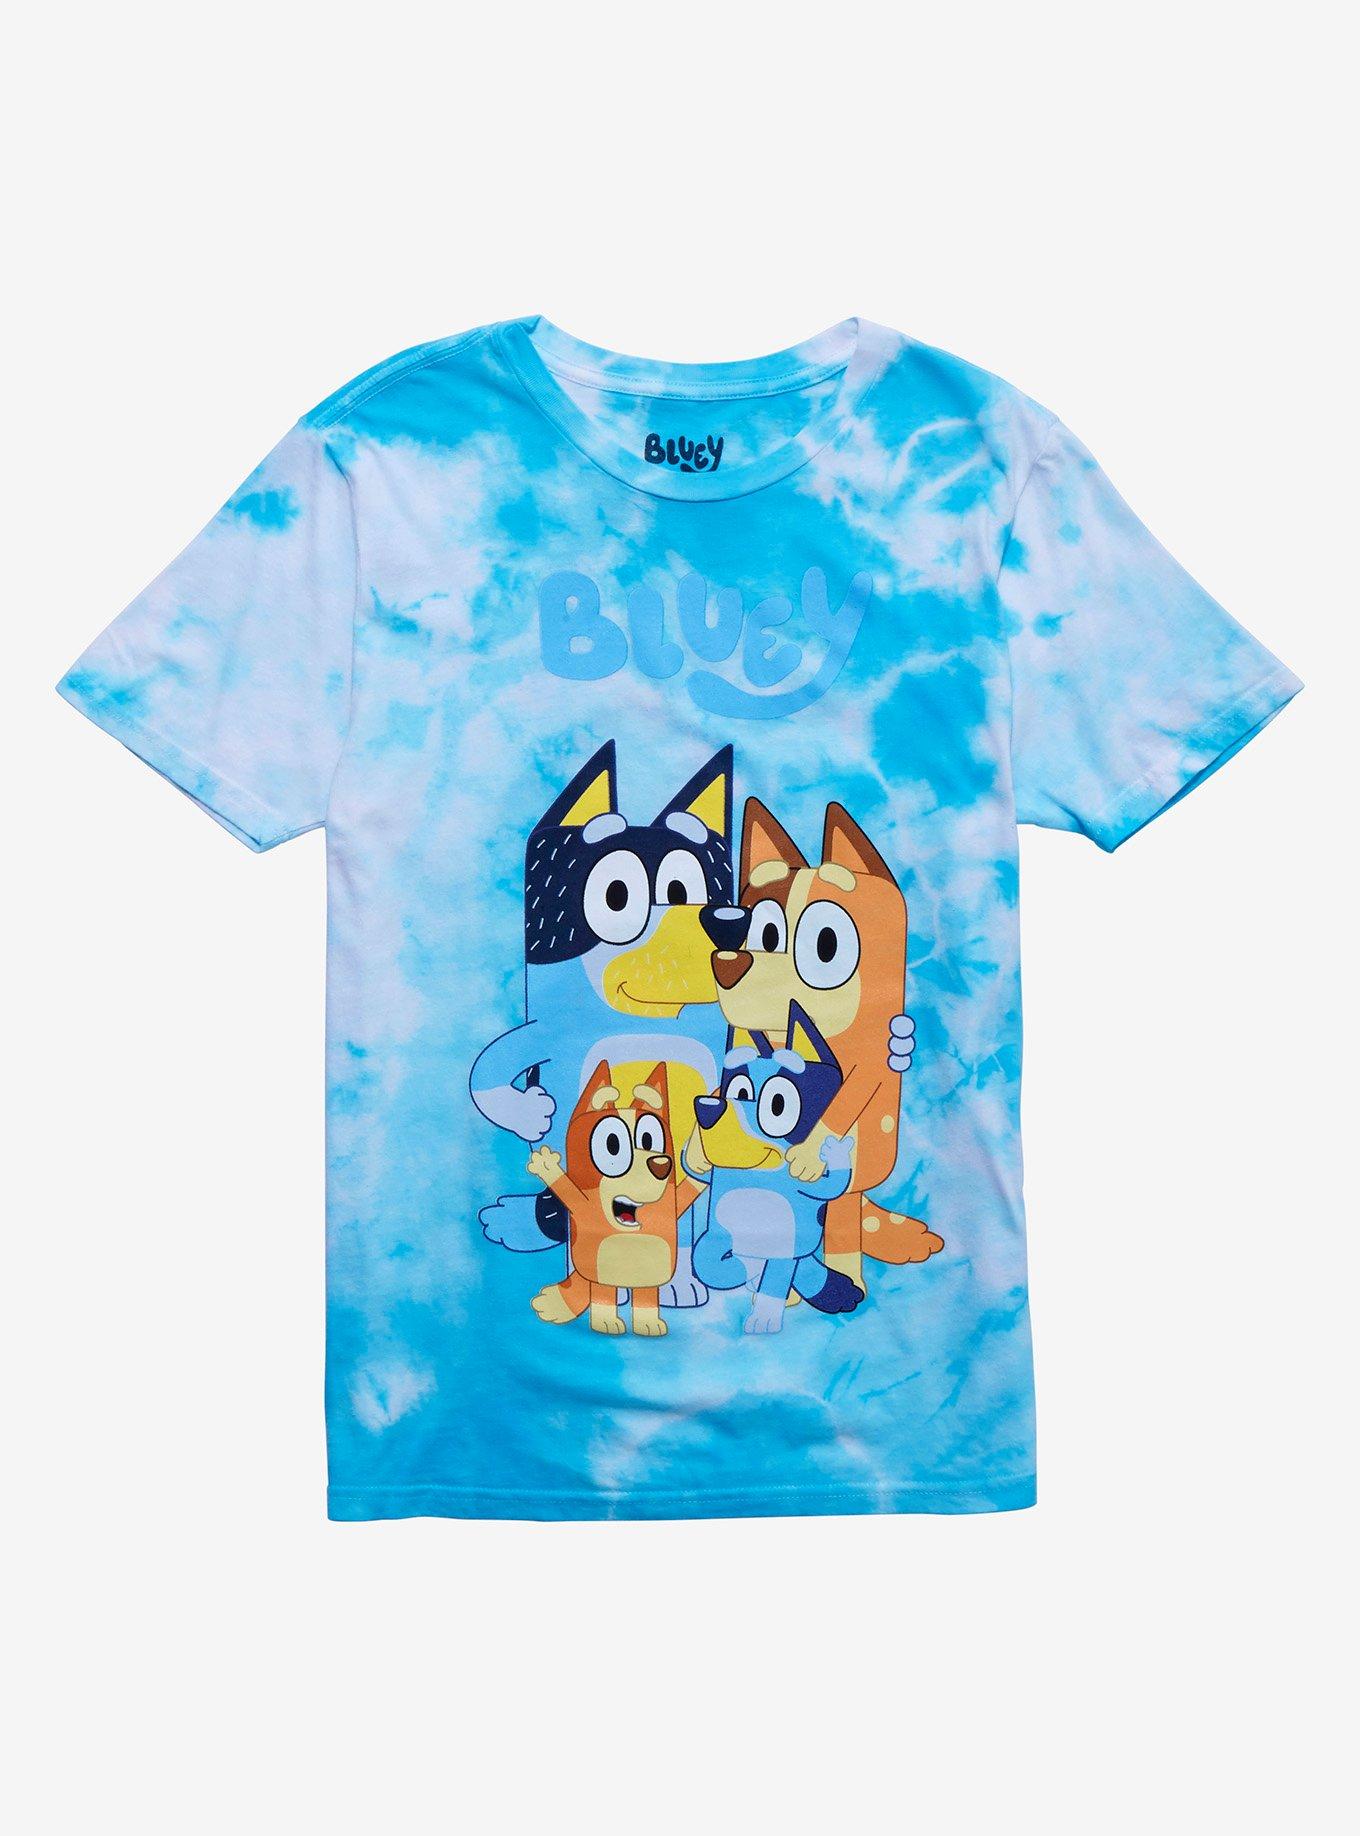 Bluey Family Tie-Dye Boyfriend Fit Girls T-Shirt